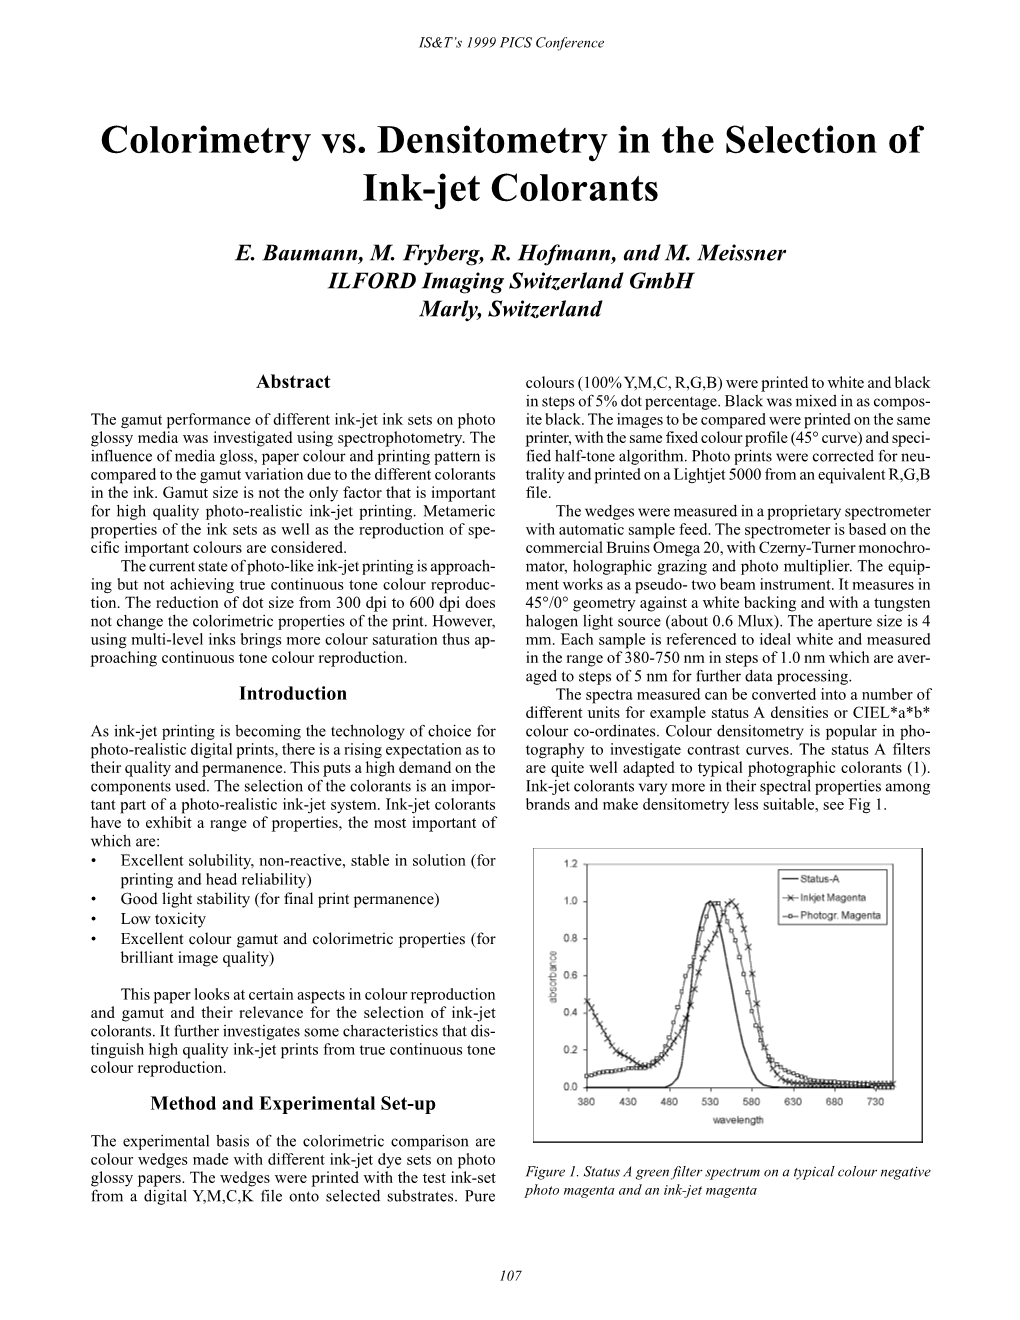 Colorimetry Vs. Densitometry in the Selection of Ink-Jet Colorants